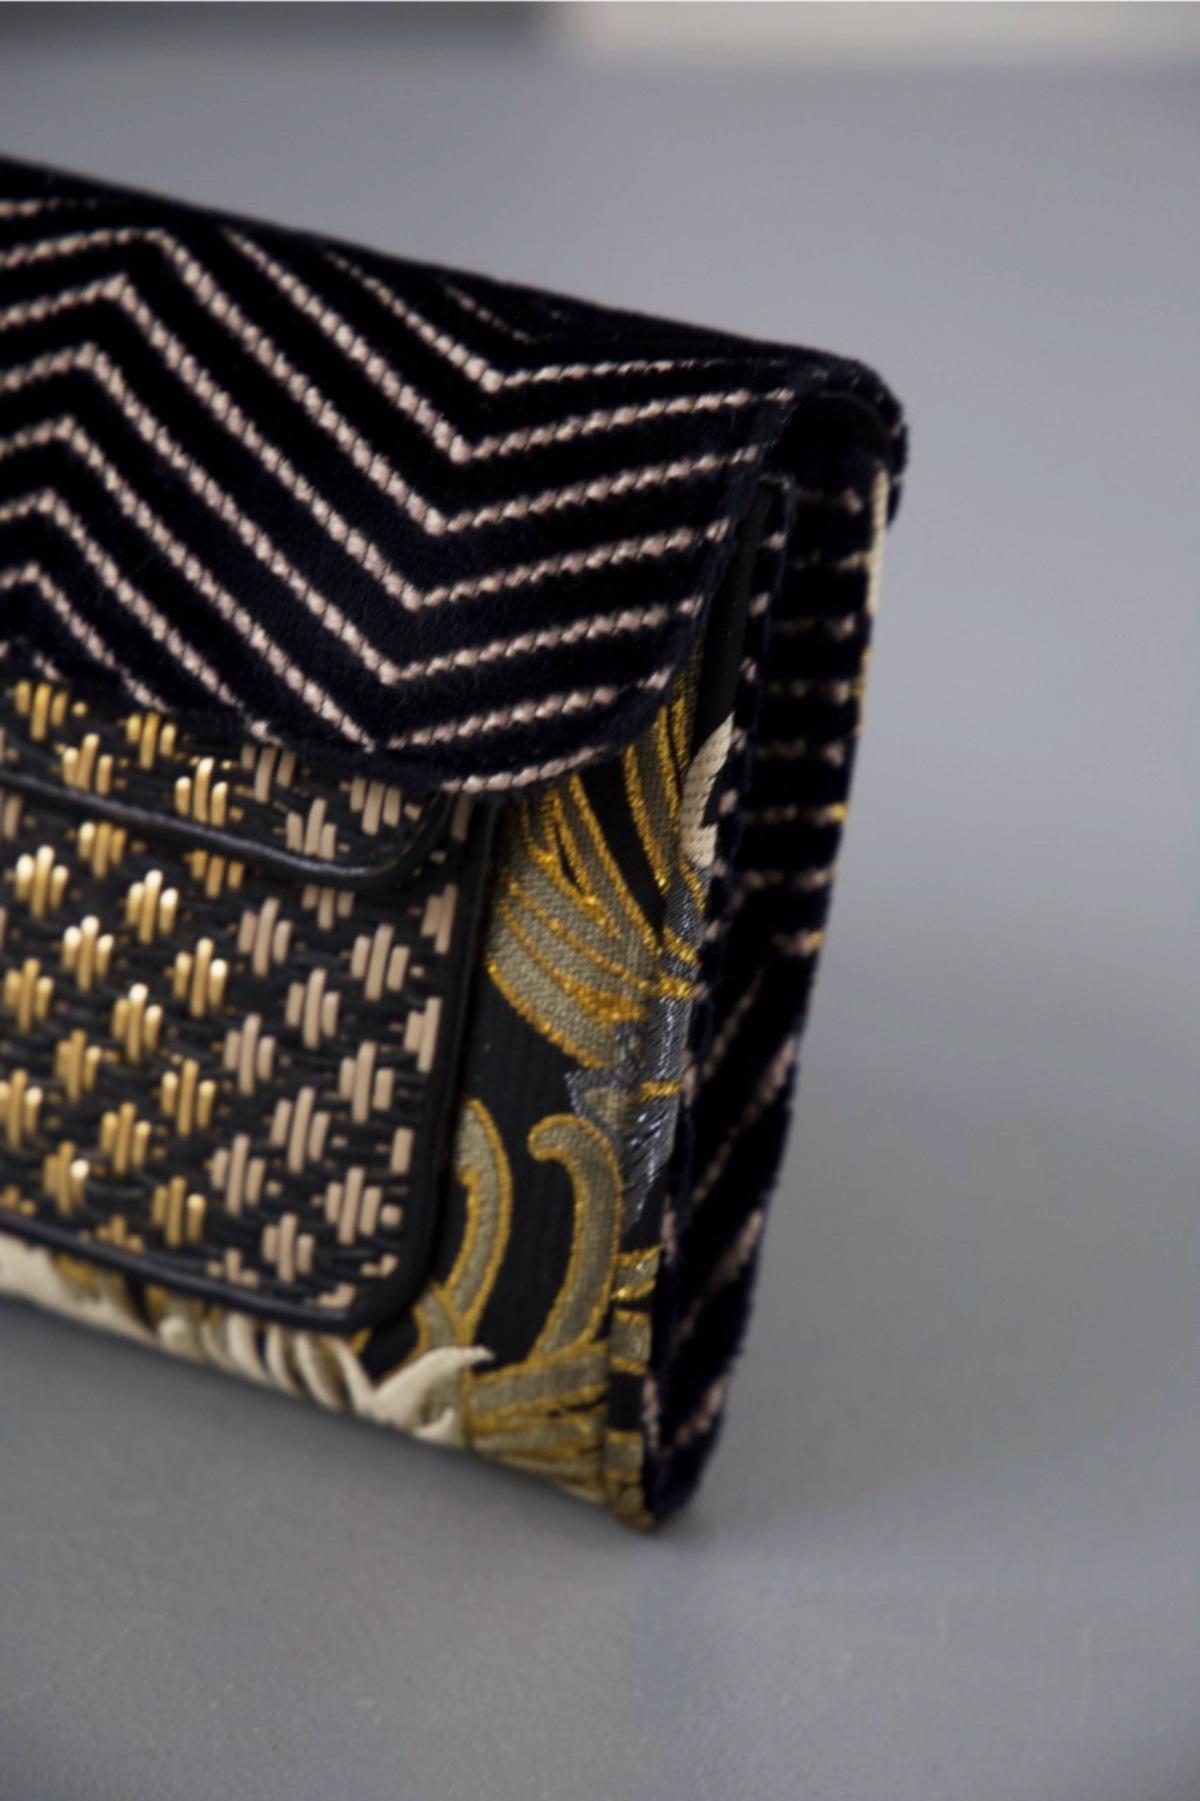 Black Bulgari Women's Clutch Bag with Golden Floral Details